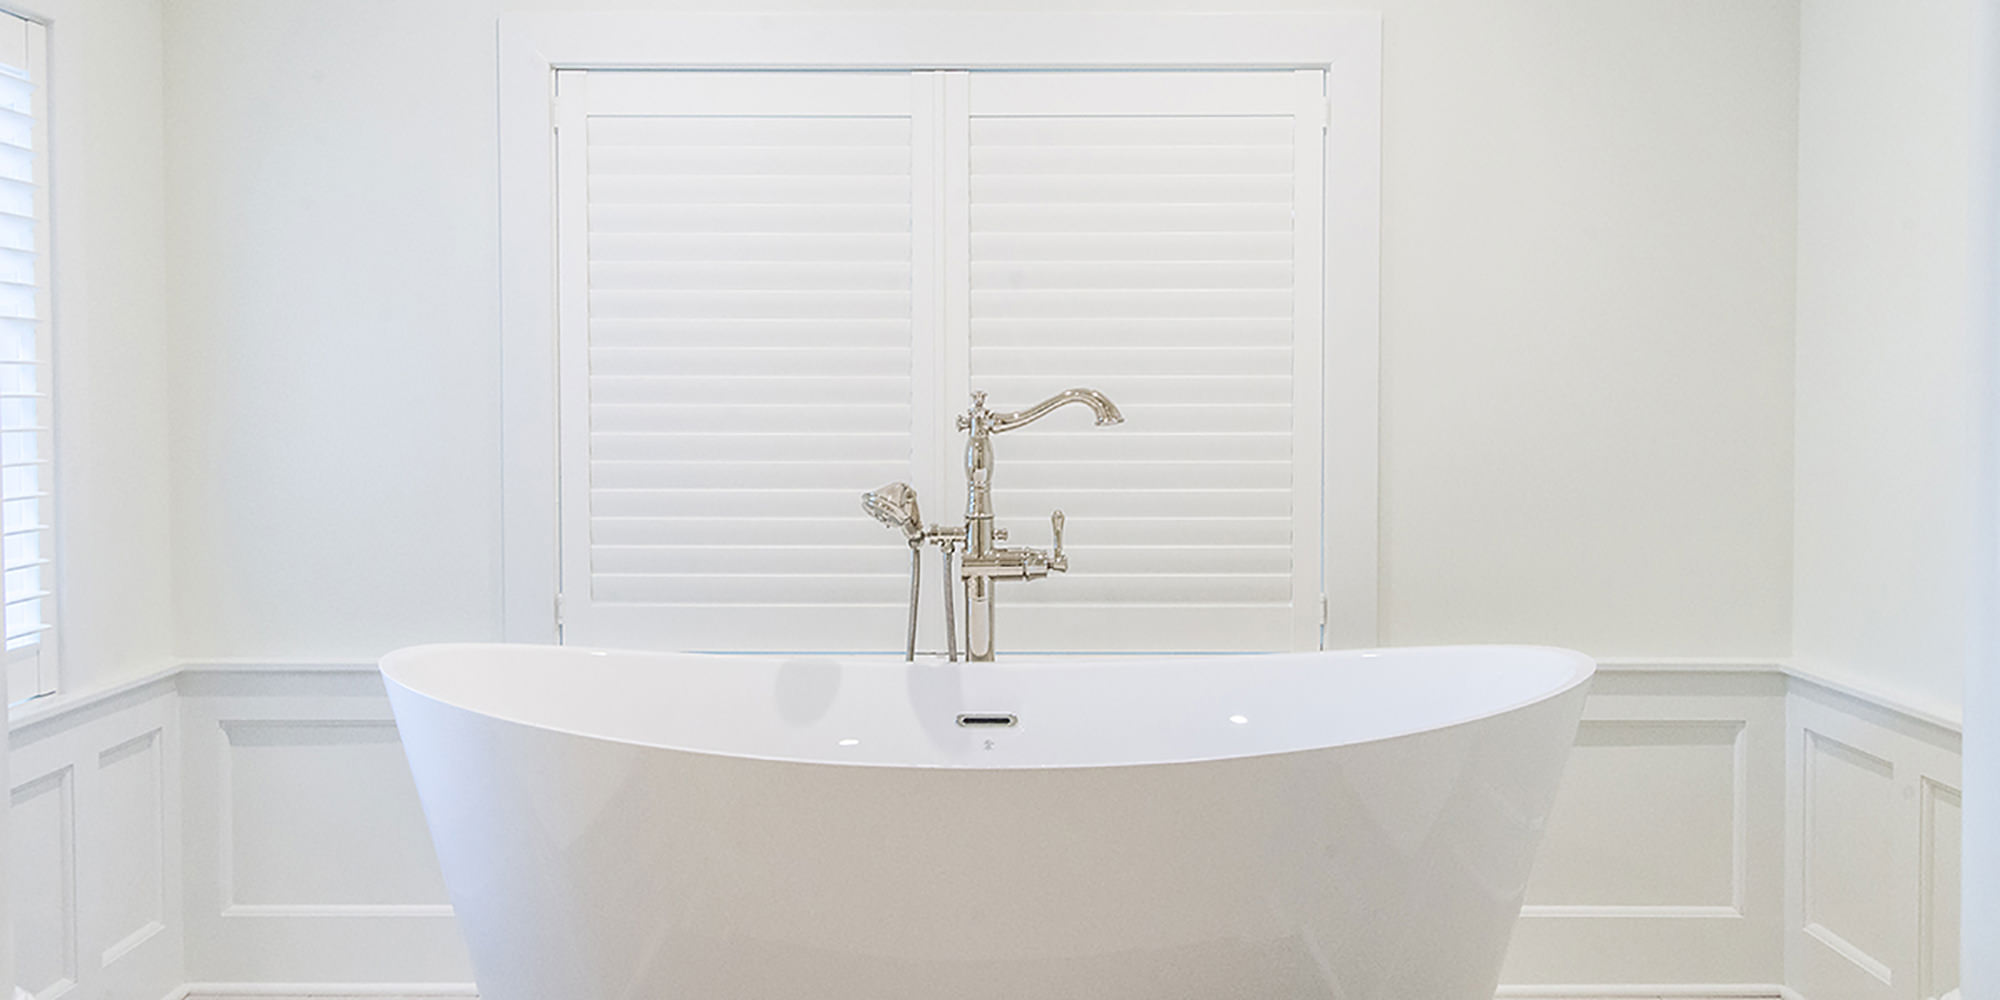 White porcelain free standing soaking tub in white bathroom for custom home client.